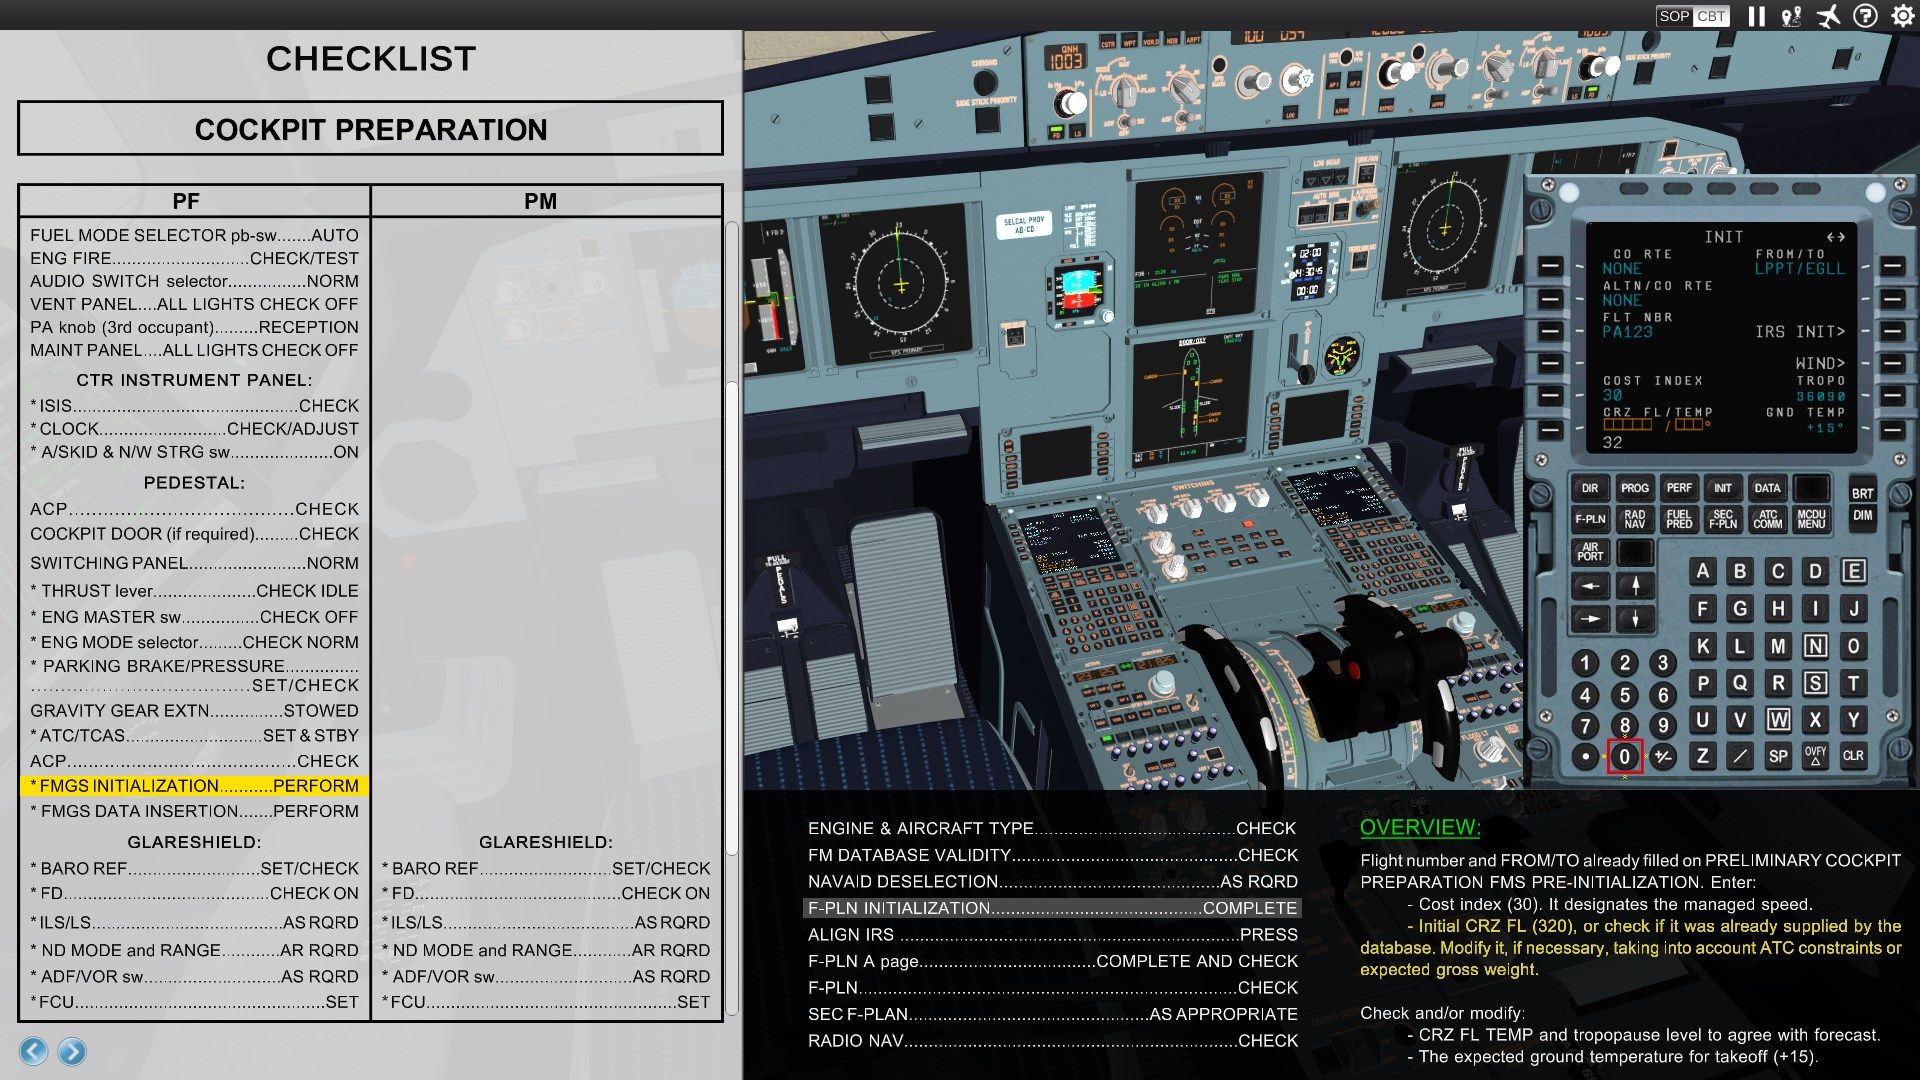 Cockpit SOP: Pilot Flying executing the cockpit preparation checklist